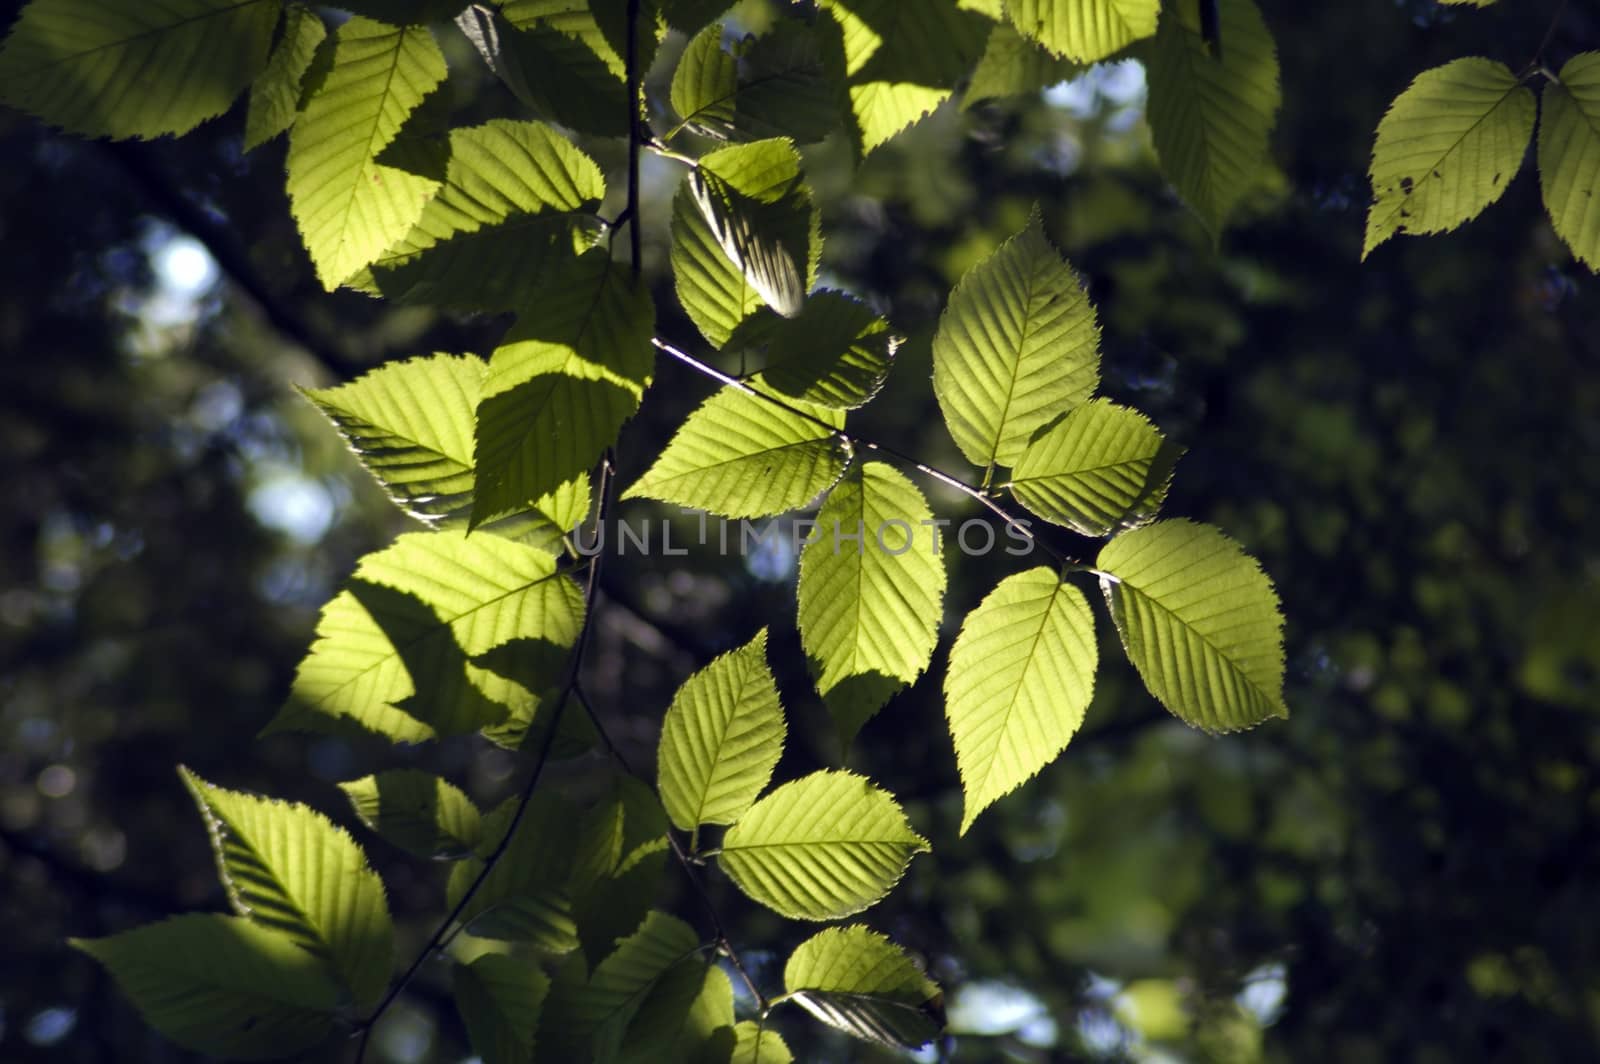 Birch leaves in sutlit on blur forest background